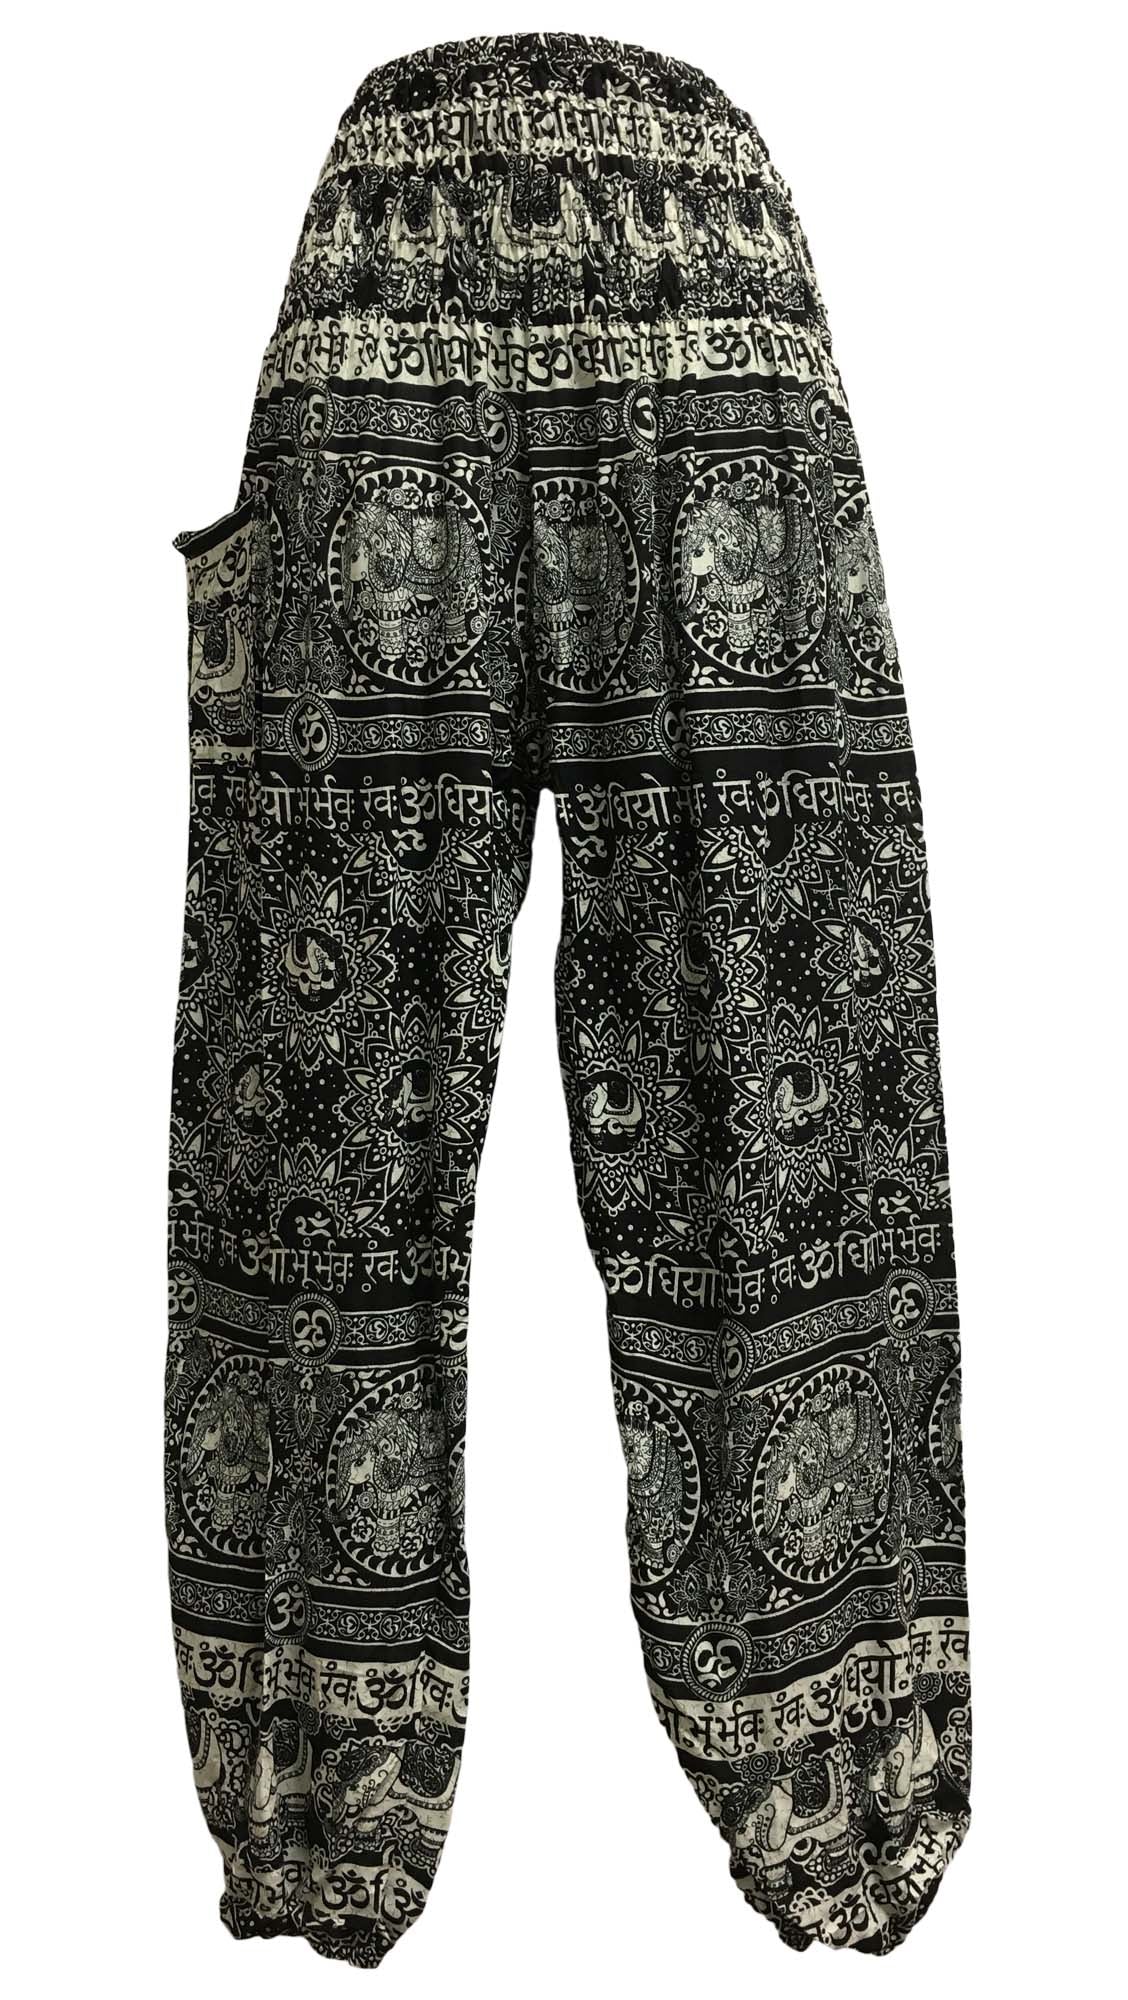 RYRJJ Men's Cotton Linen Harem Pants Drawstring Elastic Waist Casual Baggy  Trousers Lightweight Loose Beach Yoga Pants with Pockets(Beige,S) -  Walmart.com